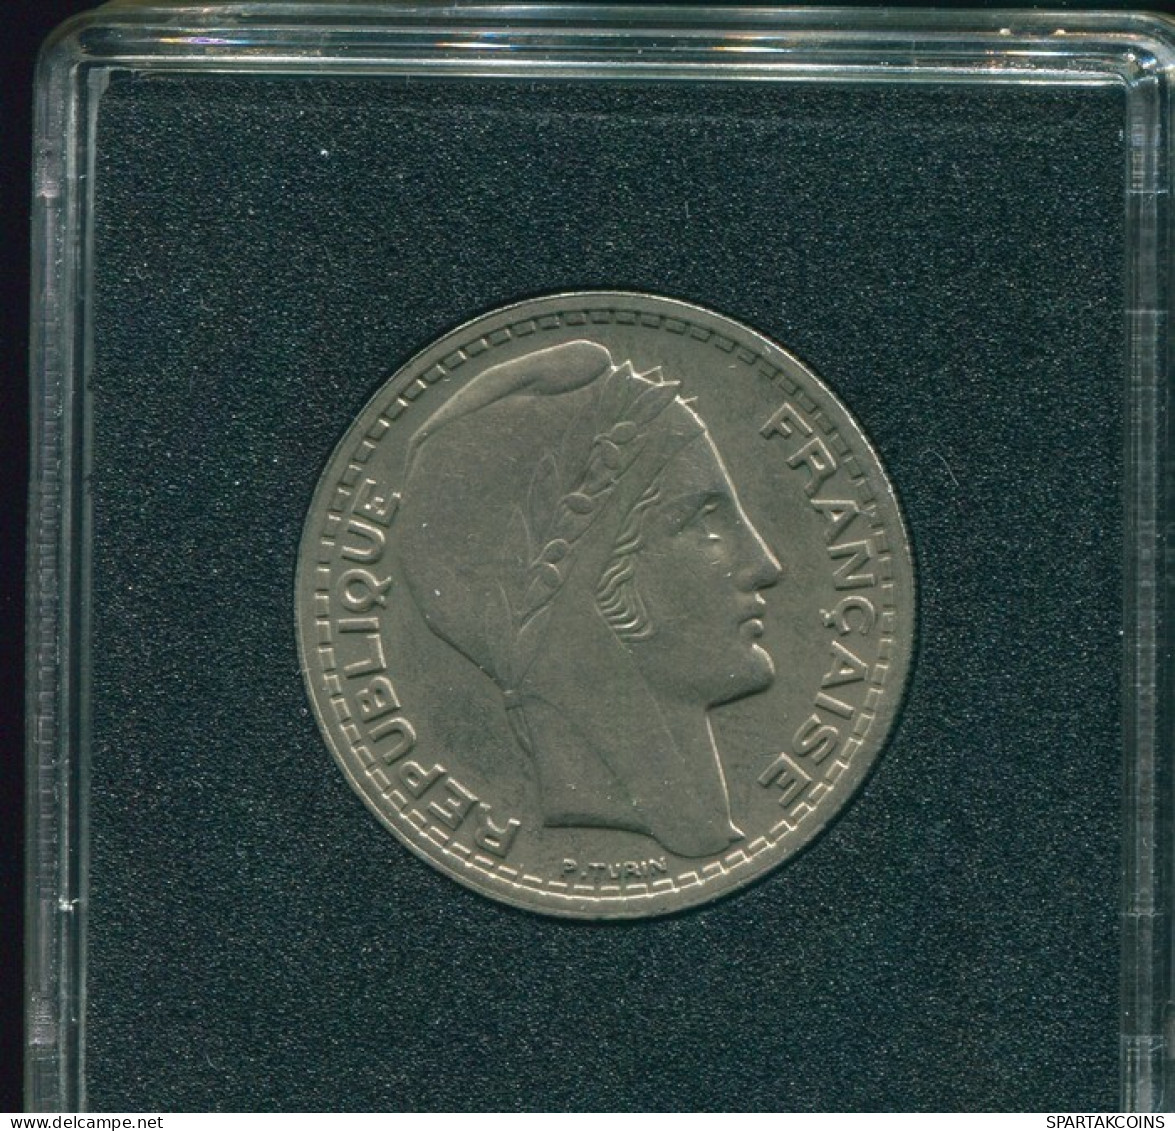 10 FRANCS 1947 FRANCE Coin XF/UNC #FR1102.6 - 10 Francs